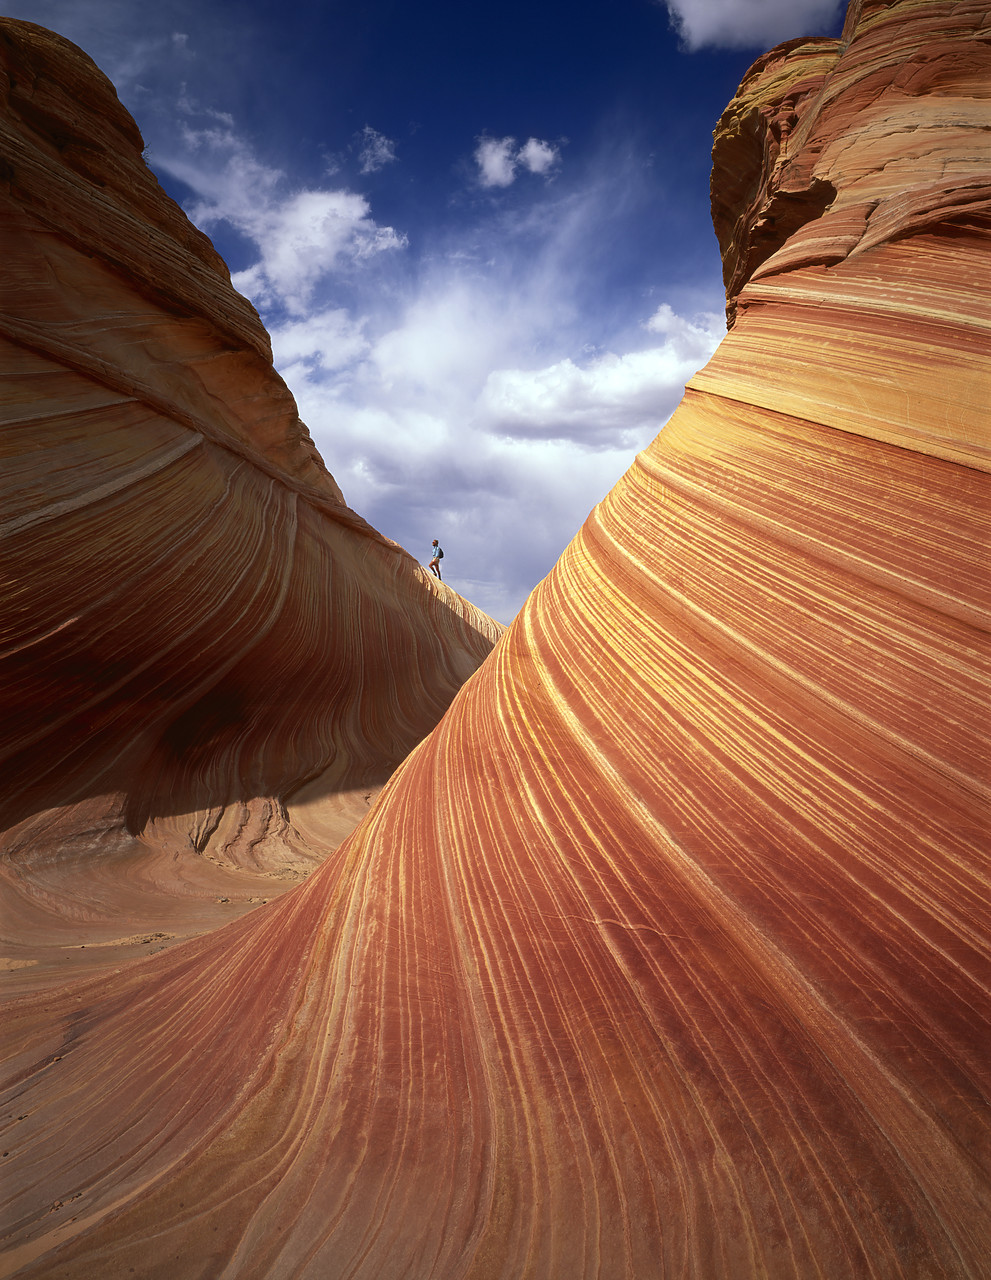 #955868-1 - Hiker on the Sandstone Wave, Paria Canyon, Arizona, USA